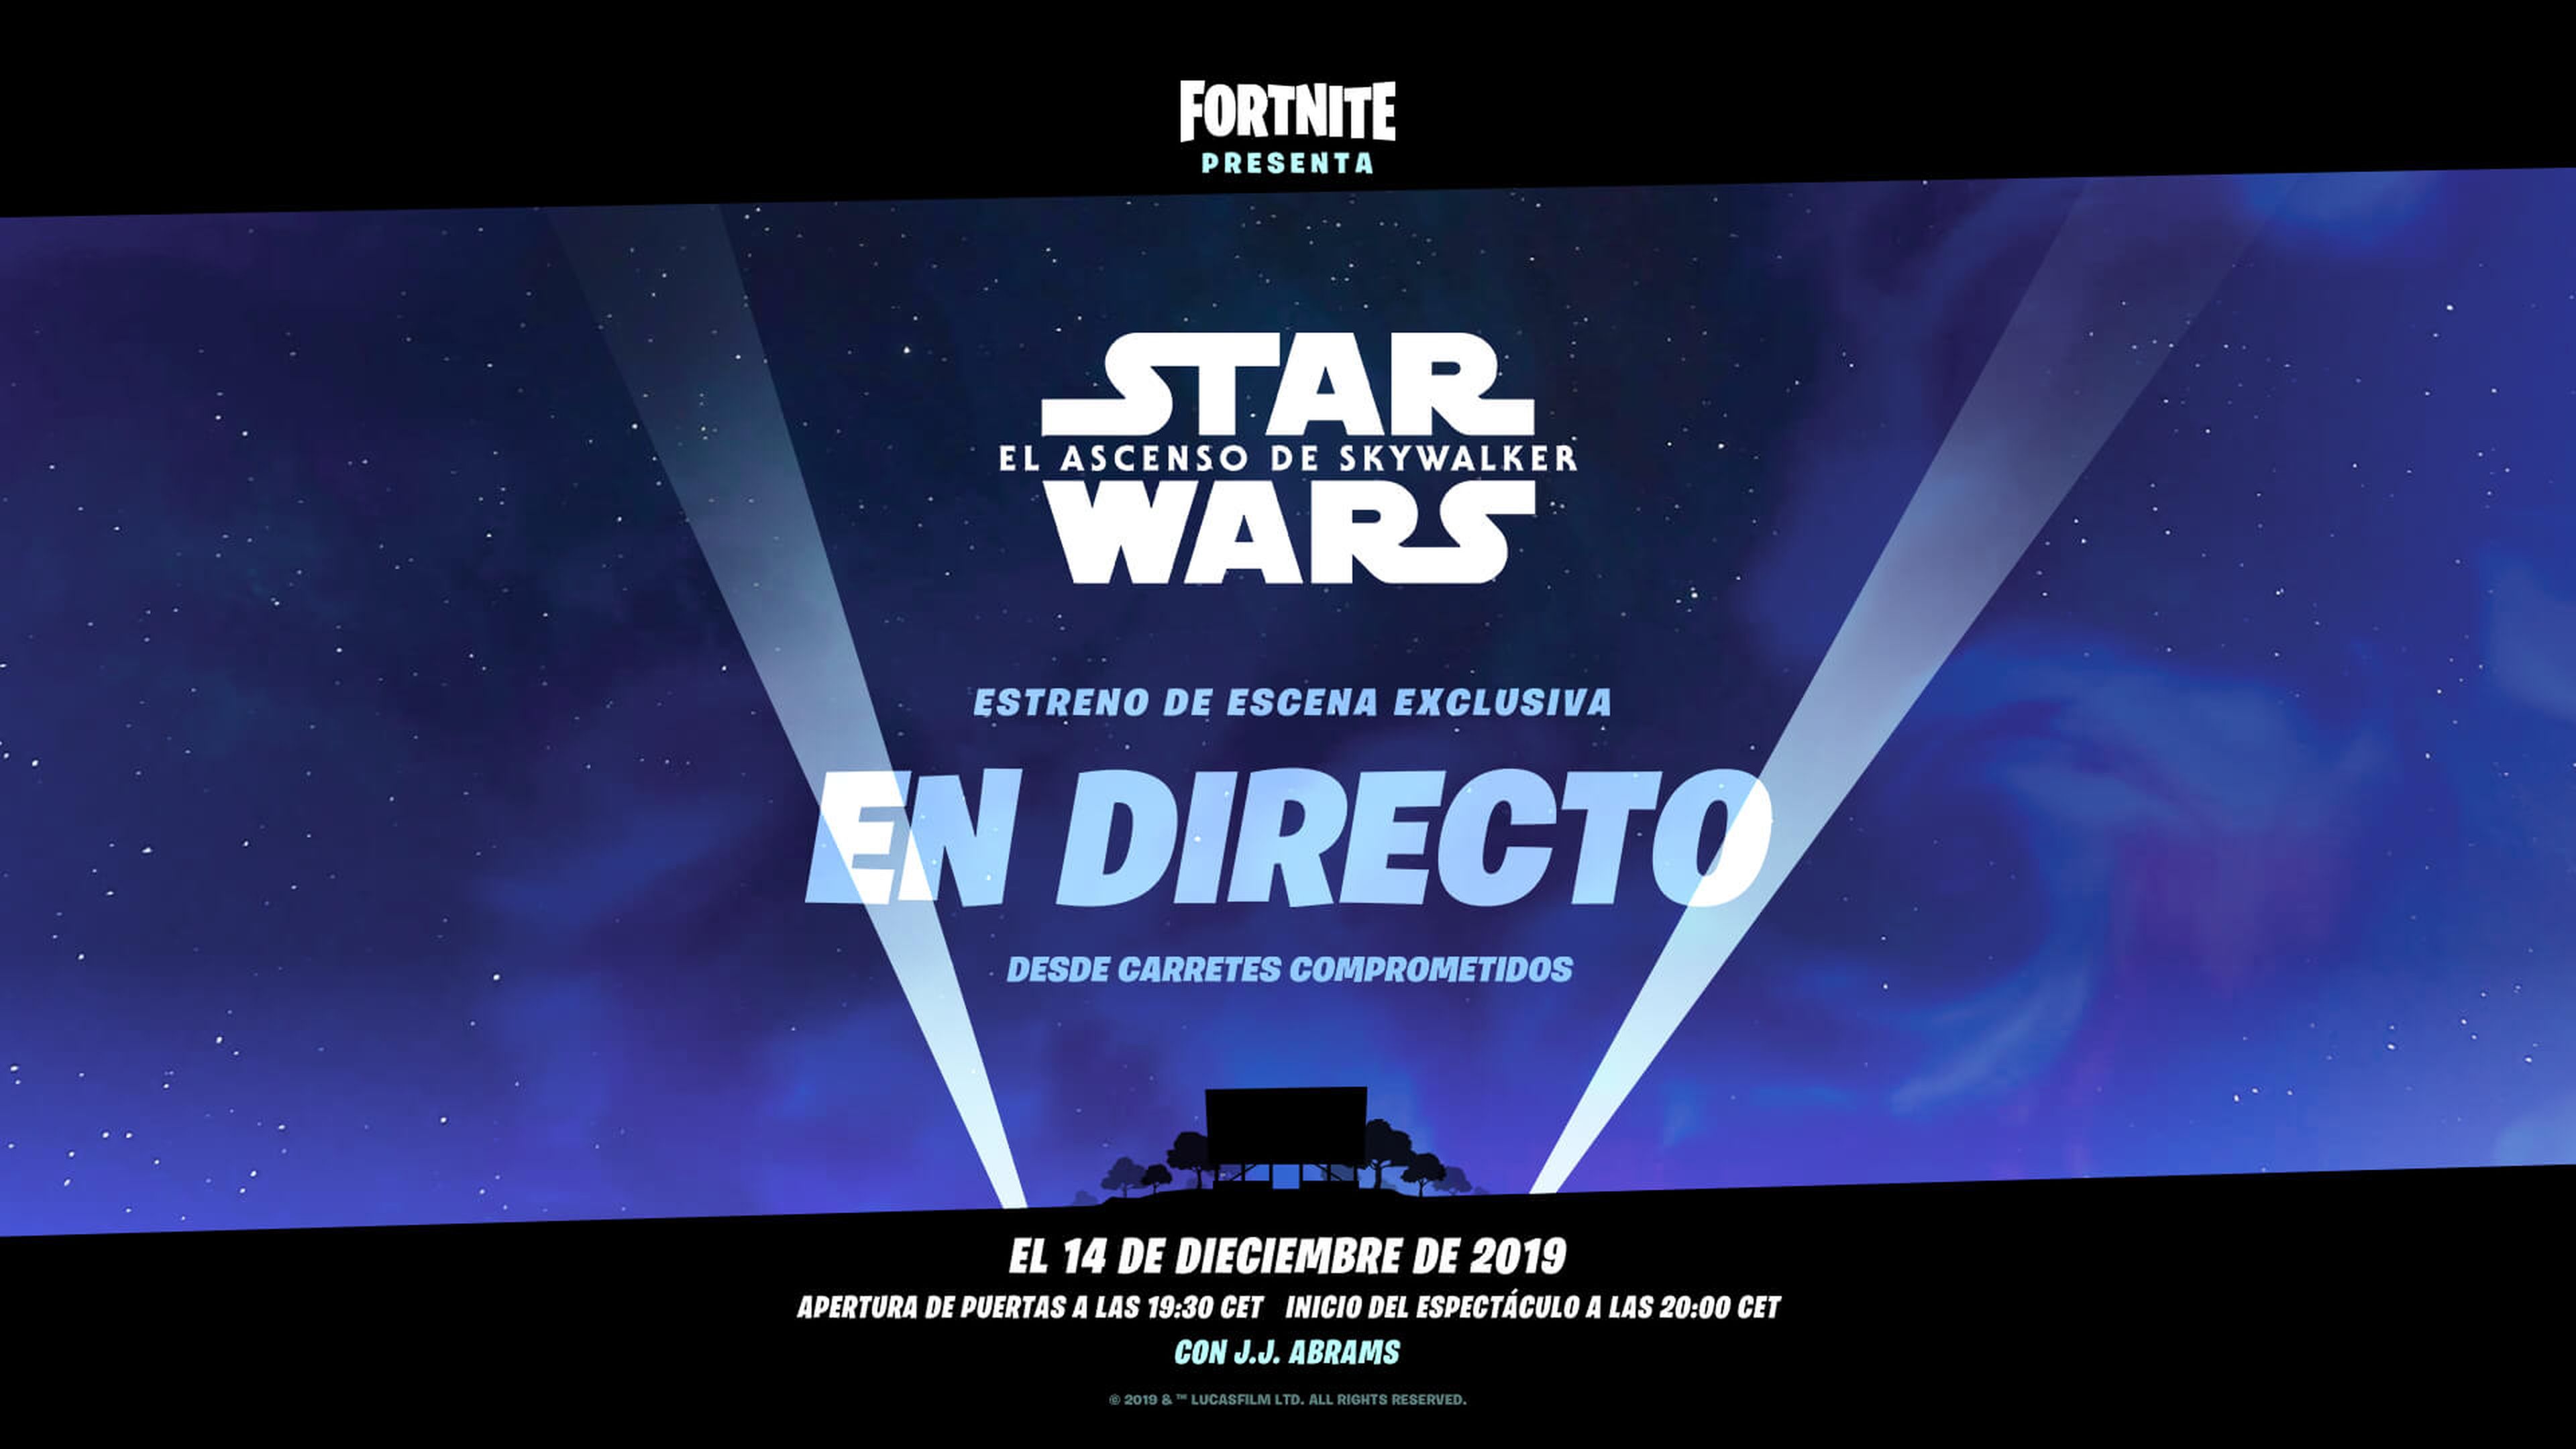 Star Wars Fortnite Evento